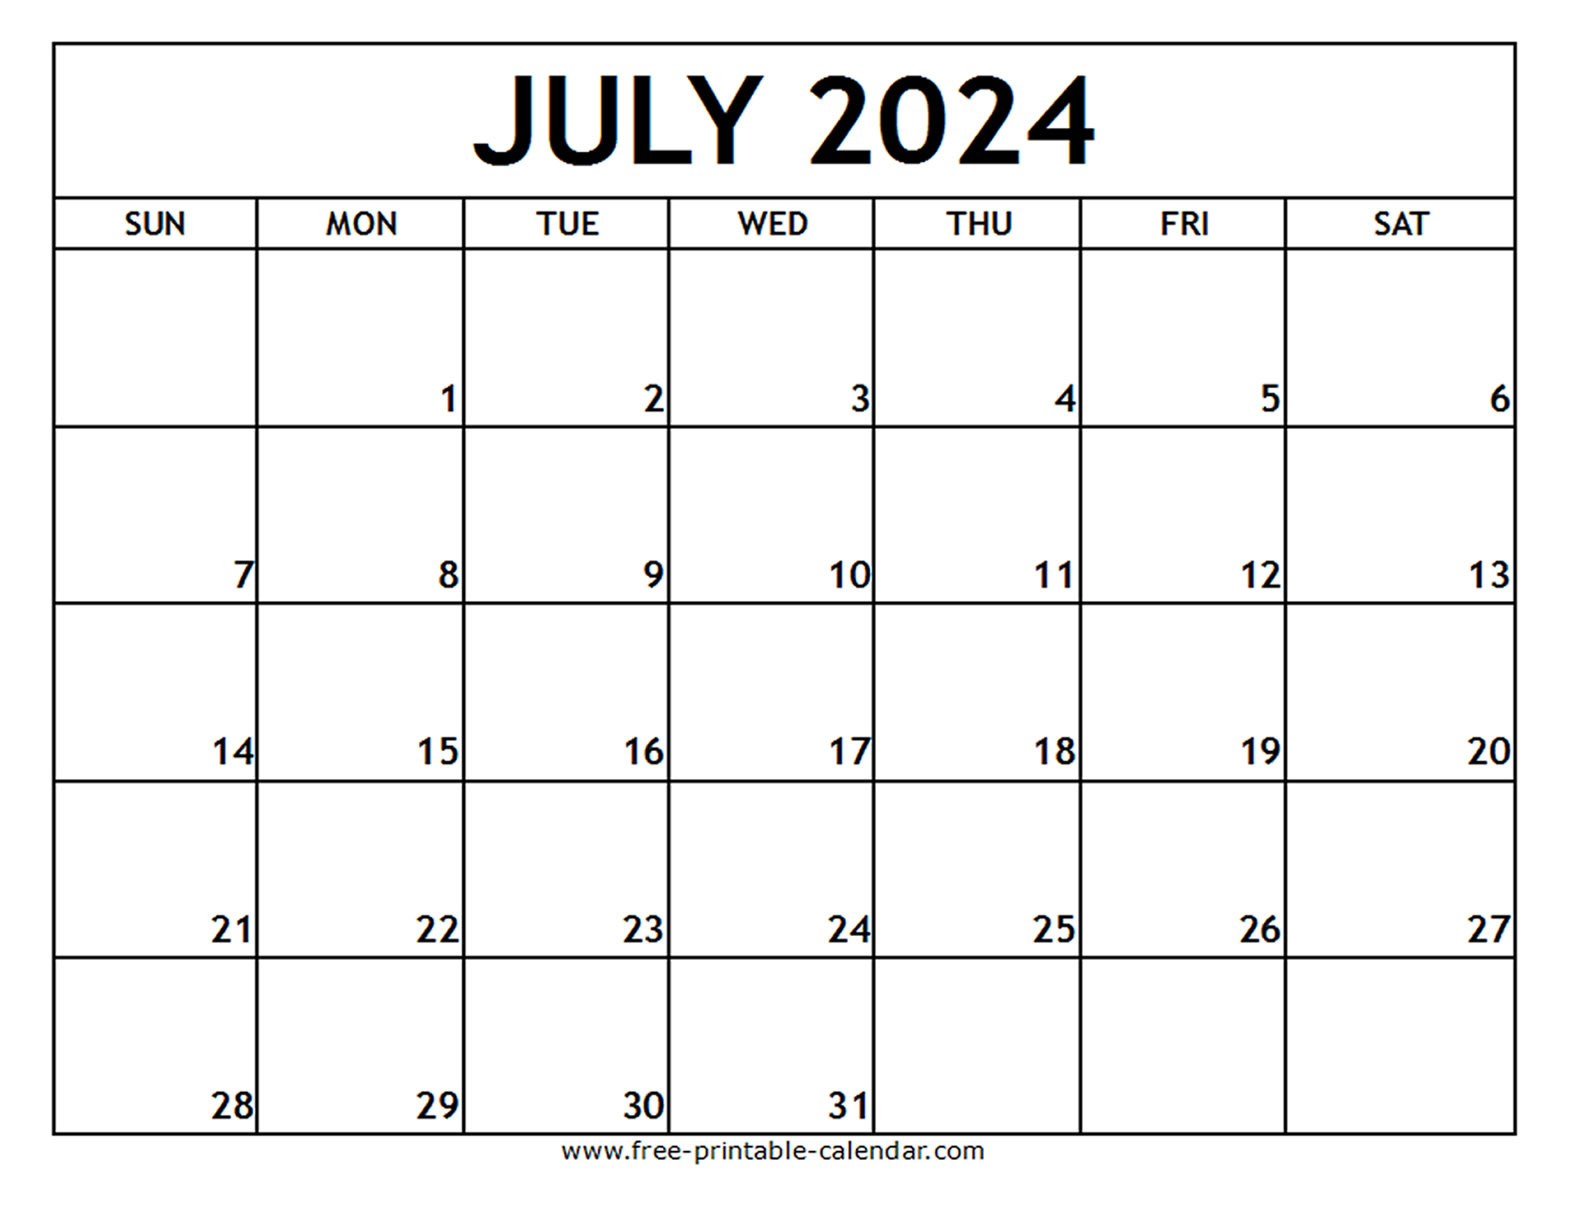 July 2024 Printable Calendar - Free-Printable-Calendar in July Free Calendar 2024